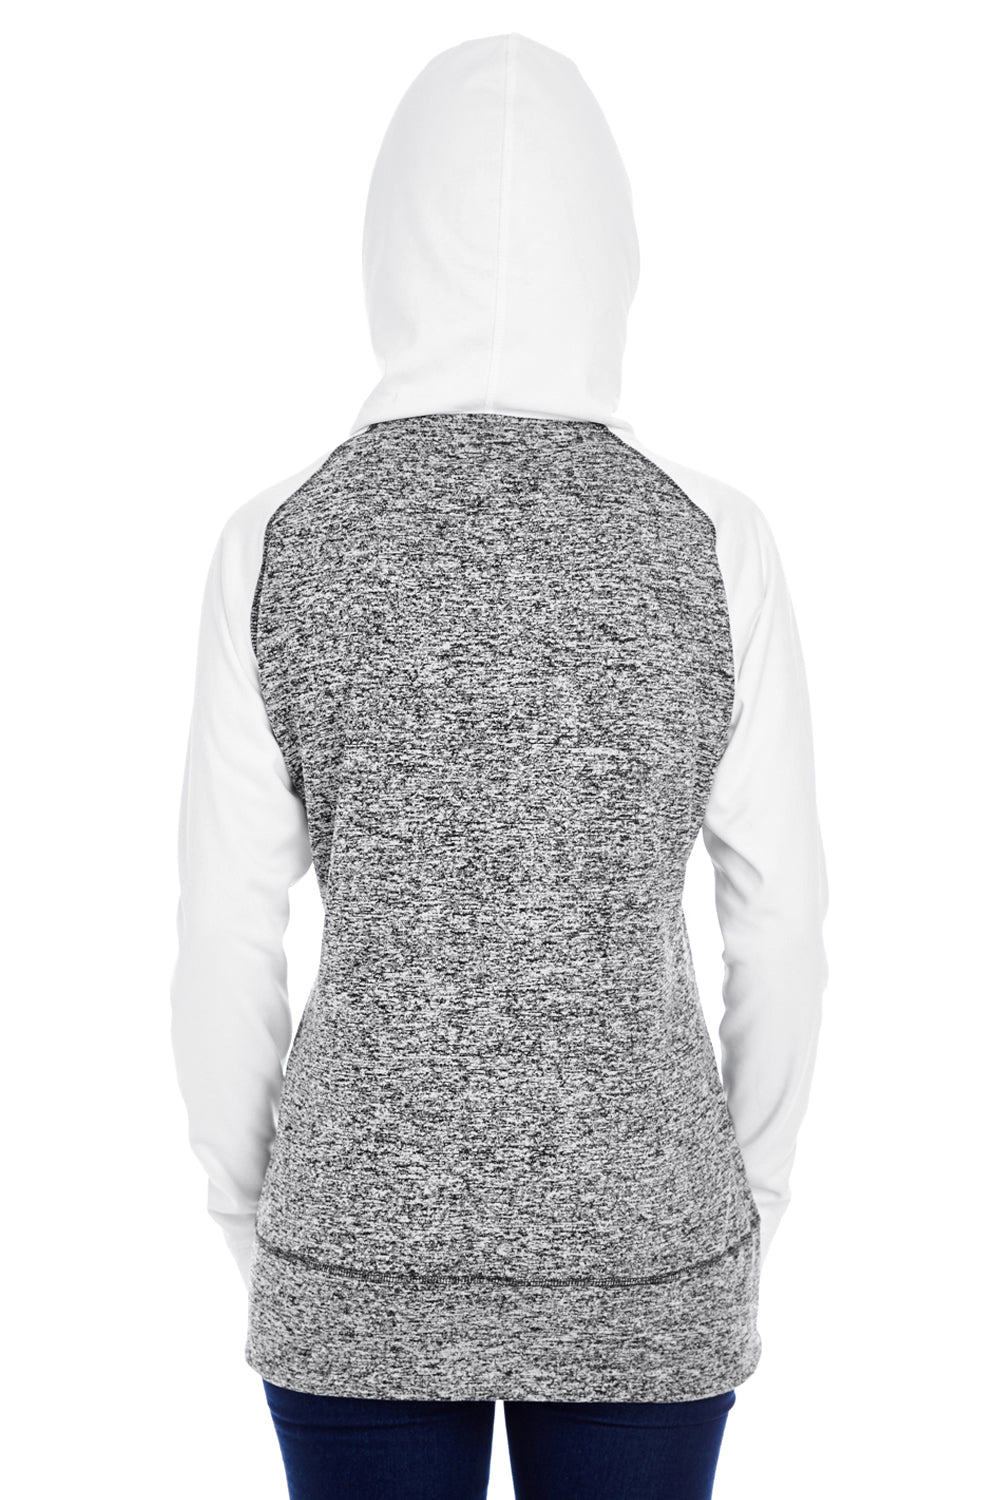 J America JA8618 Womens Cosmic Fleece Hooded Sweatshirt Hoodie Charcoal Grey/White Back